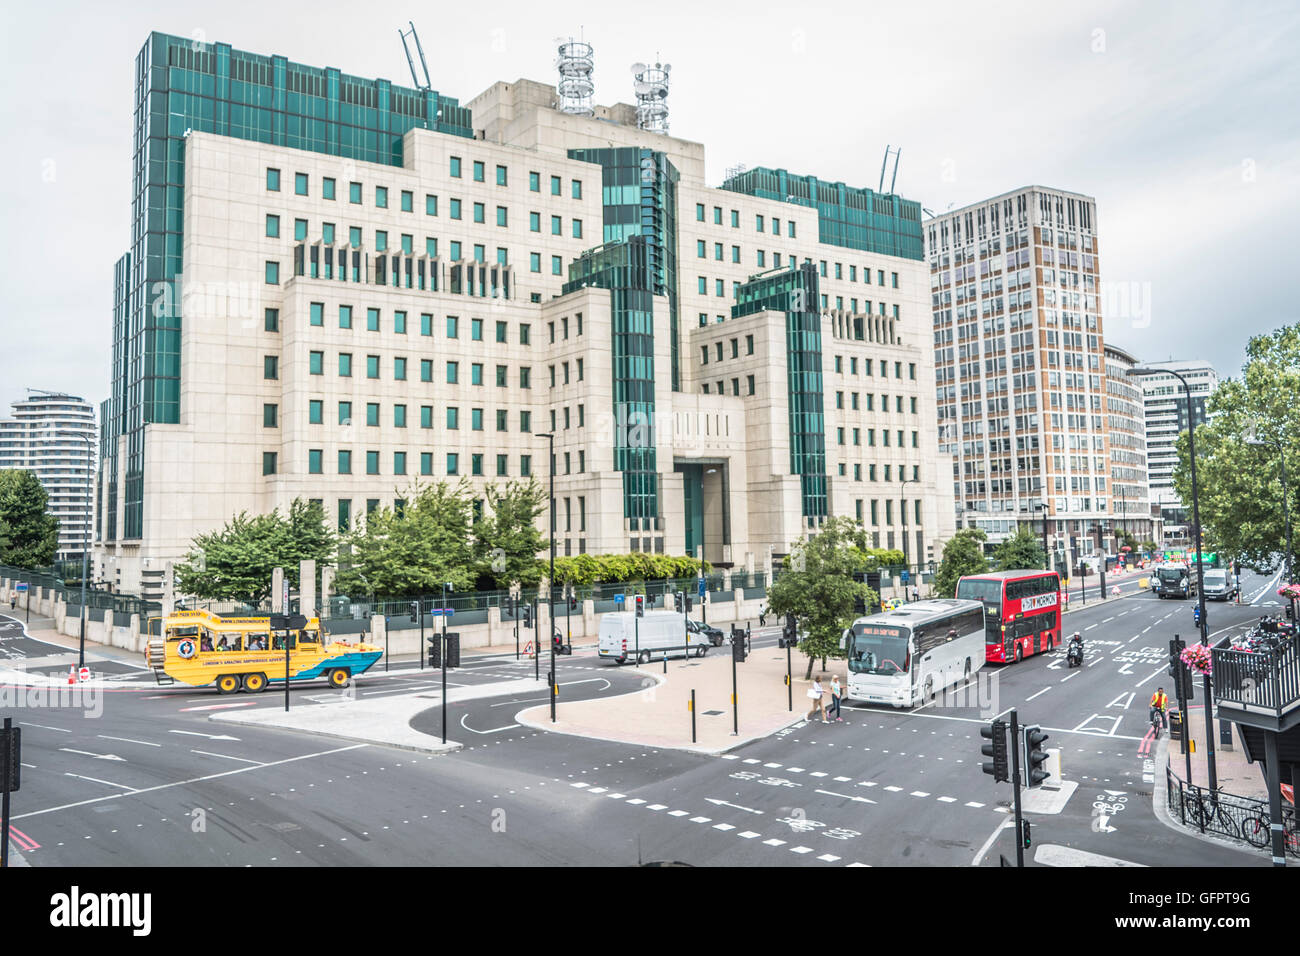 Mi6 HQ Building at Vauxhall Cross, Vauxhall, London, England, U.K. Stock Photo